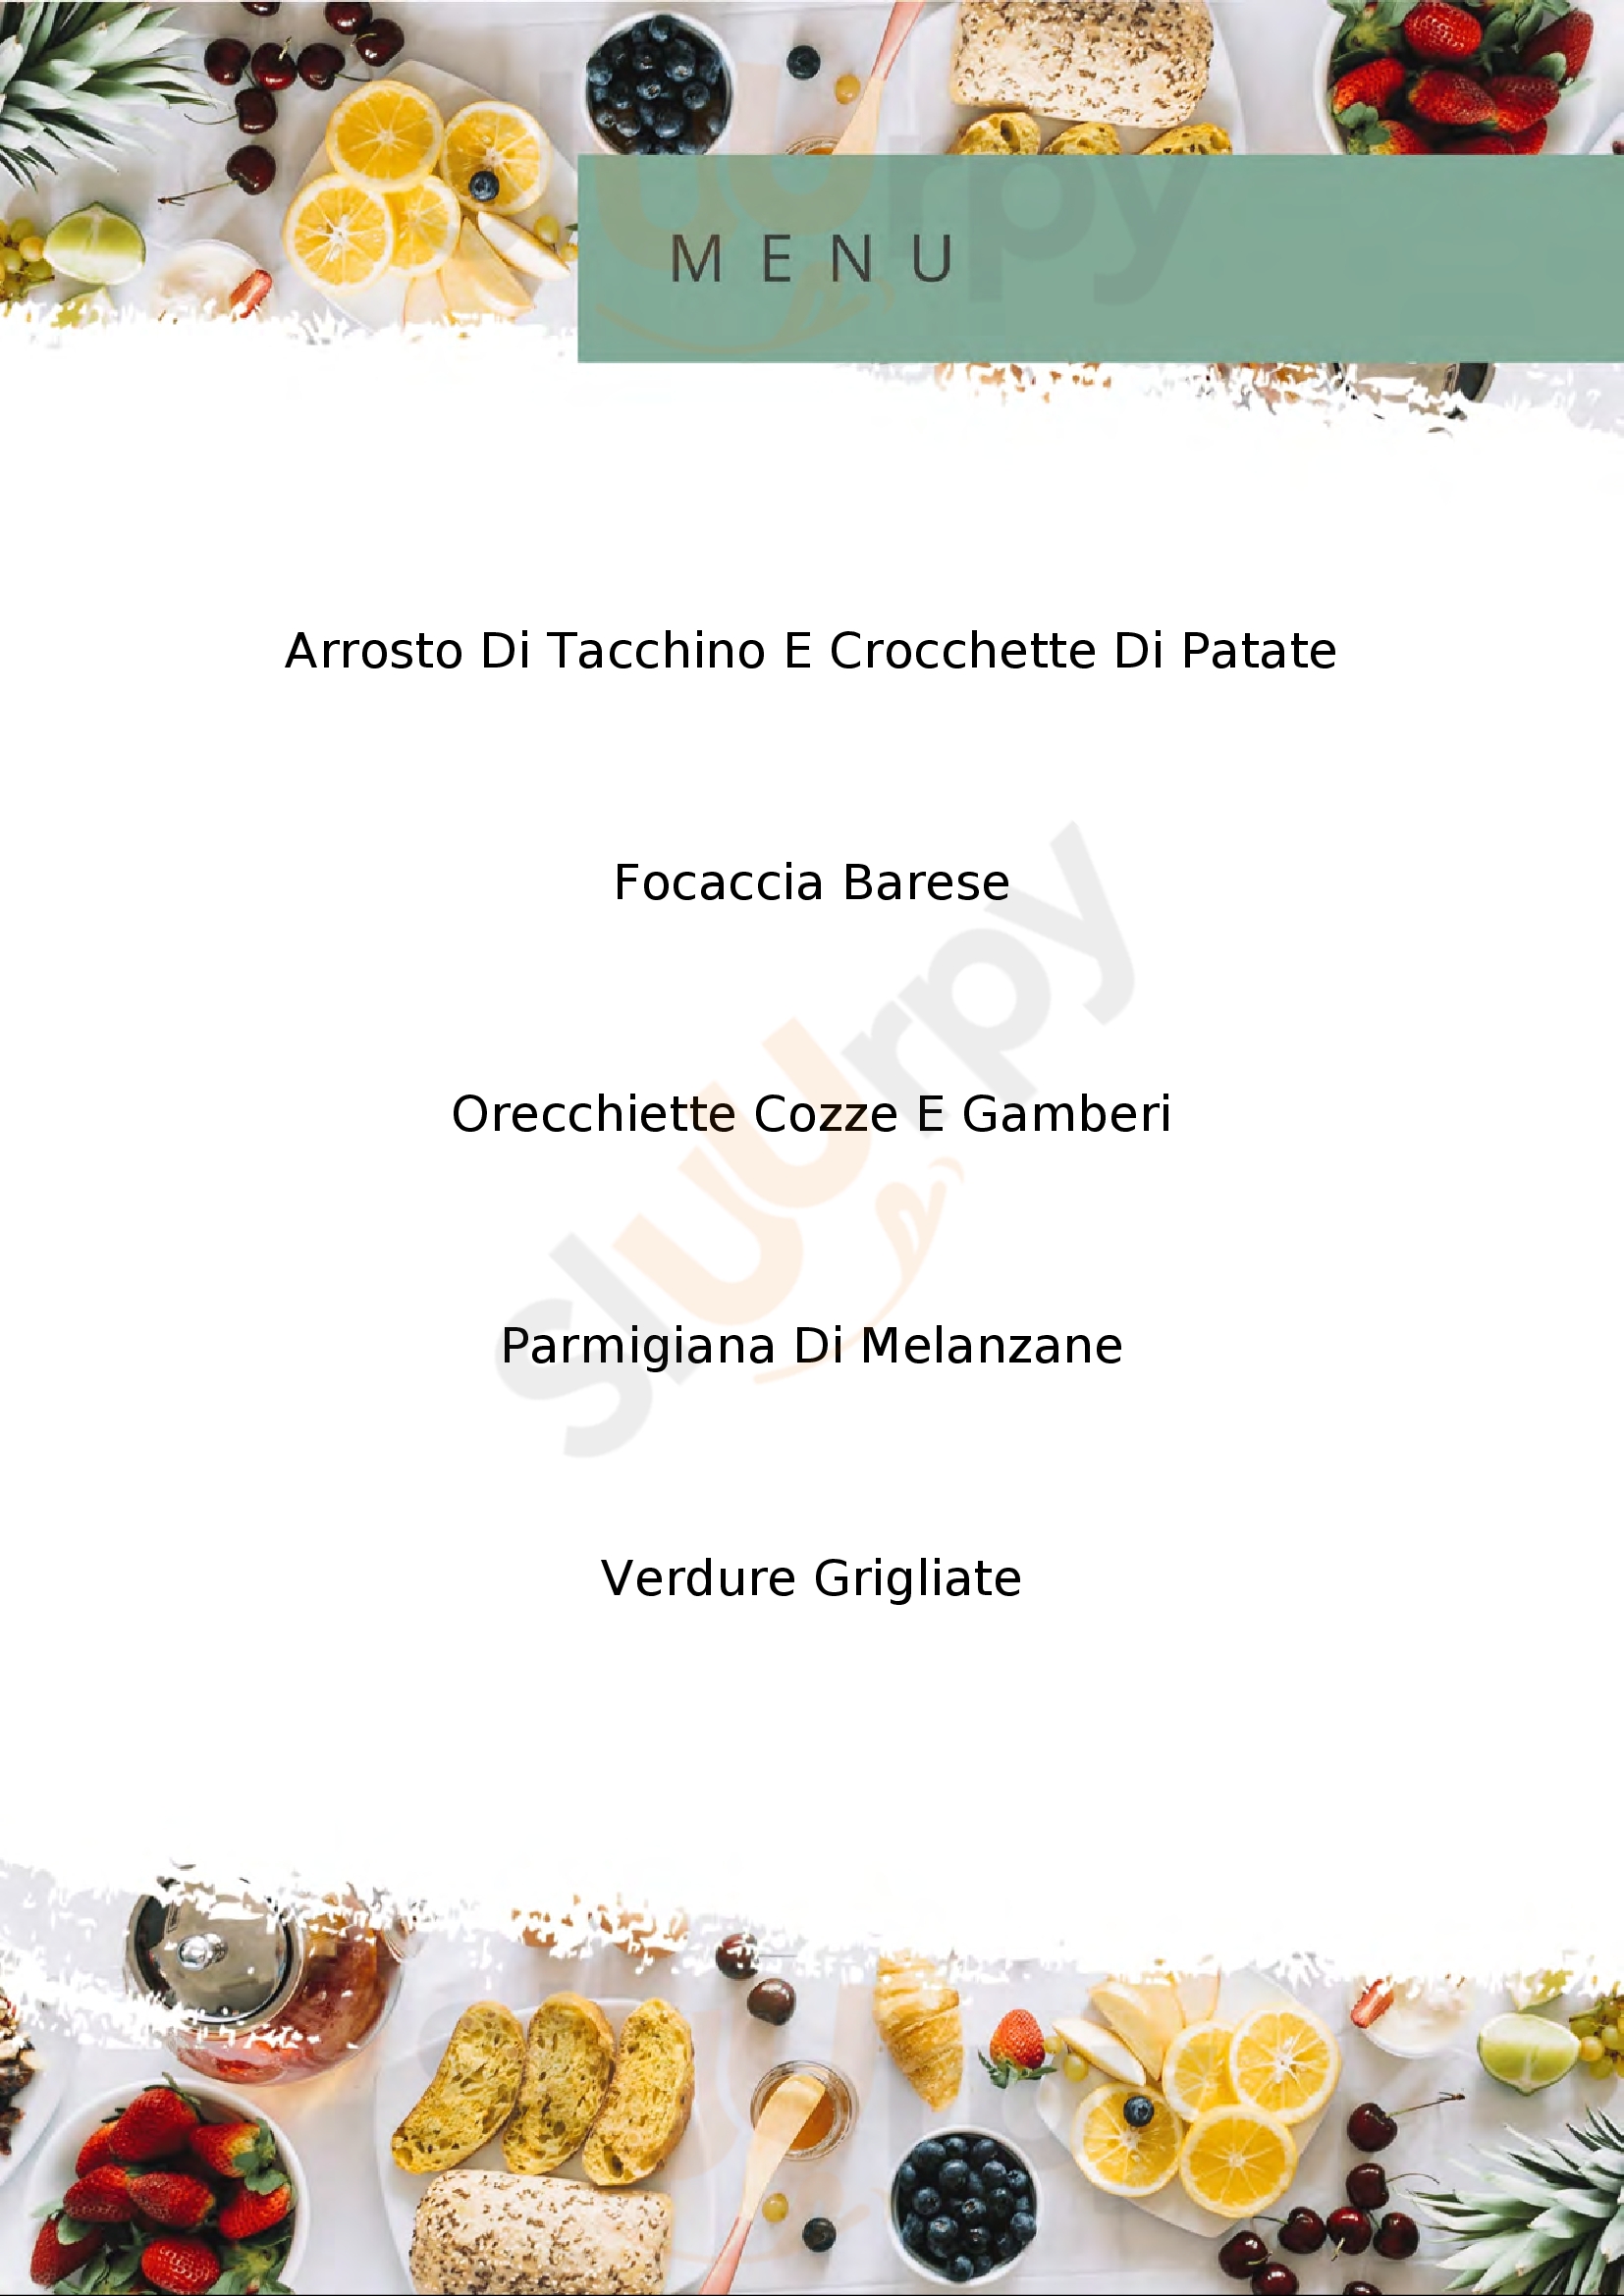 L' Ancora - Pizzeria & Tavola Calda Barletta menù 1 pagina